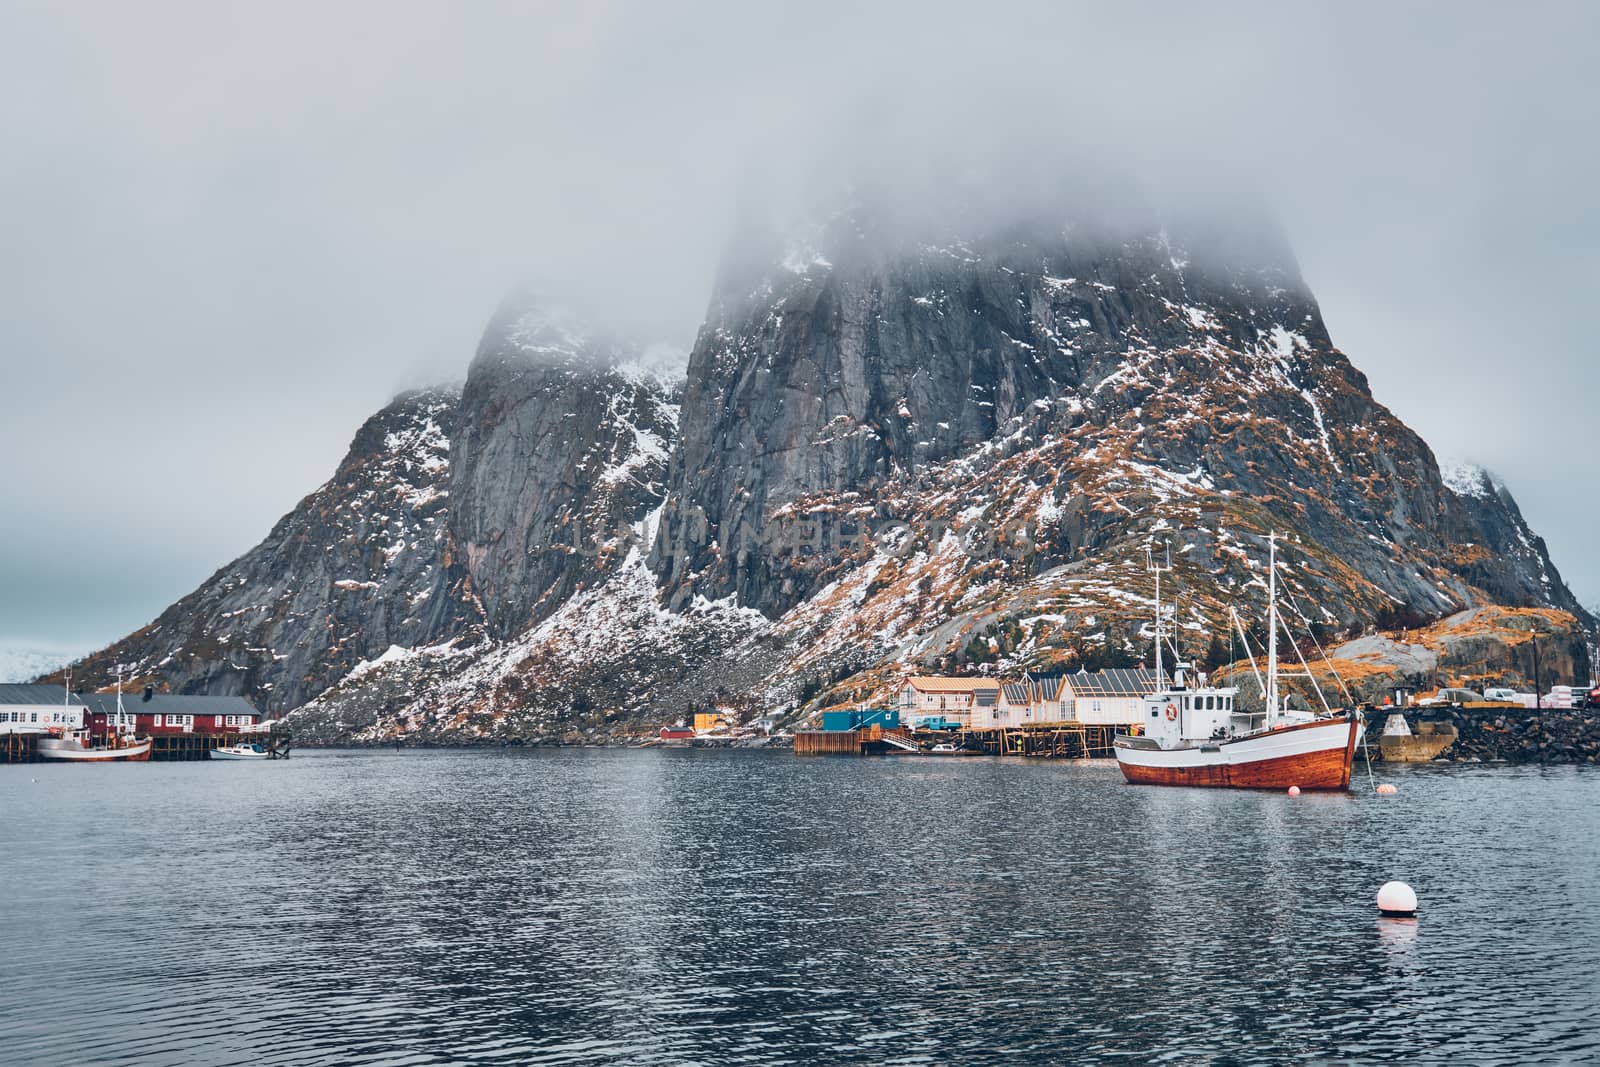 Ship in Hamnoy fishing village on Lofoten Islands, Norway by dimol